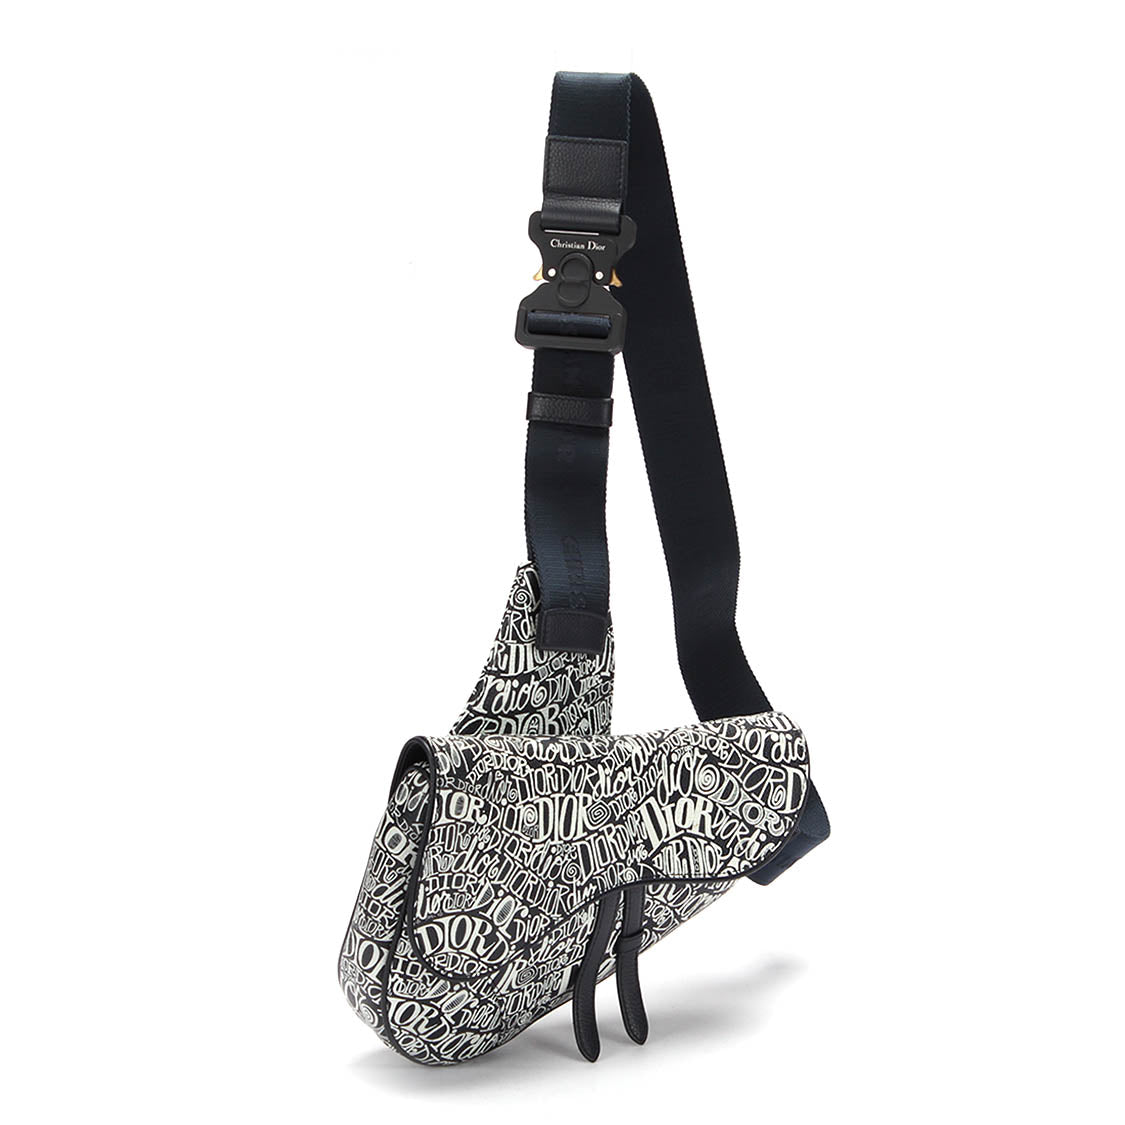 Dior Men x Shawn Stussy Printed Leather Saddle Bag